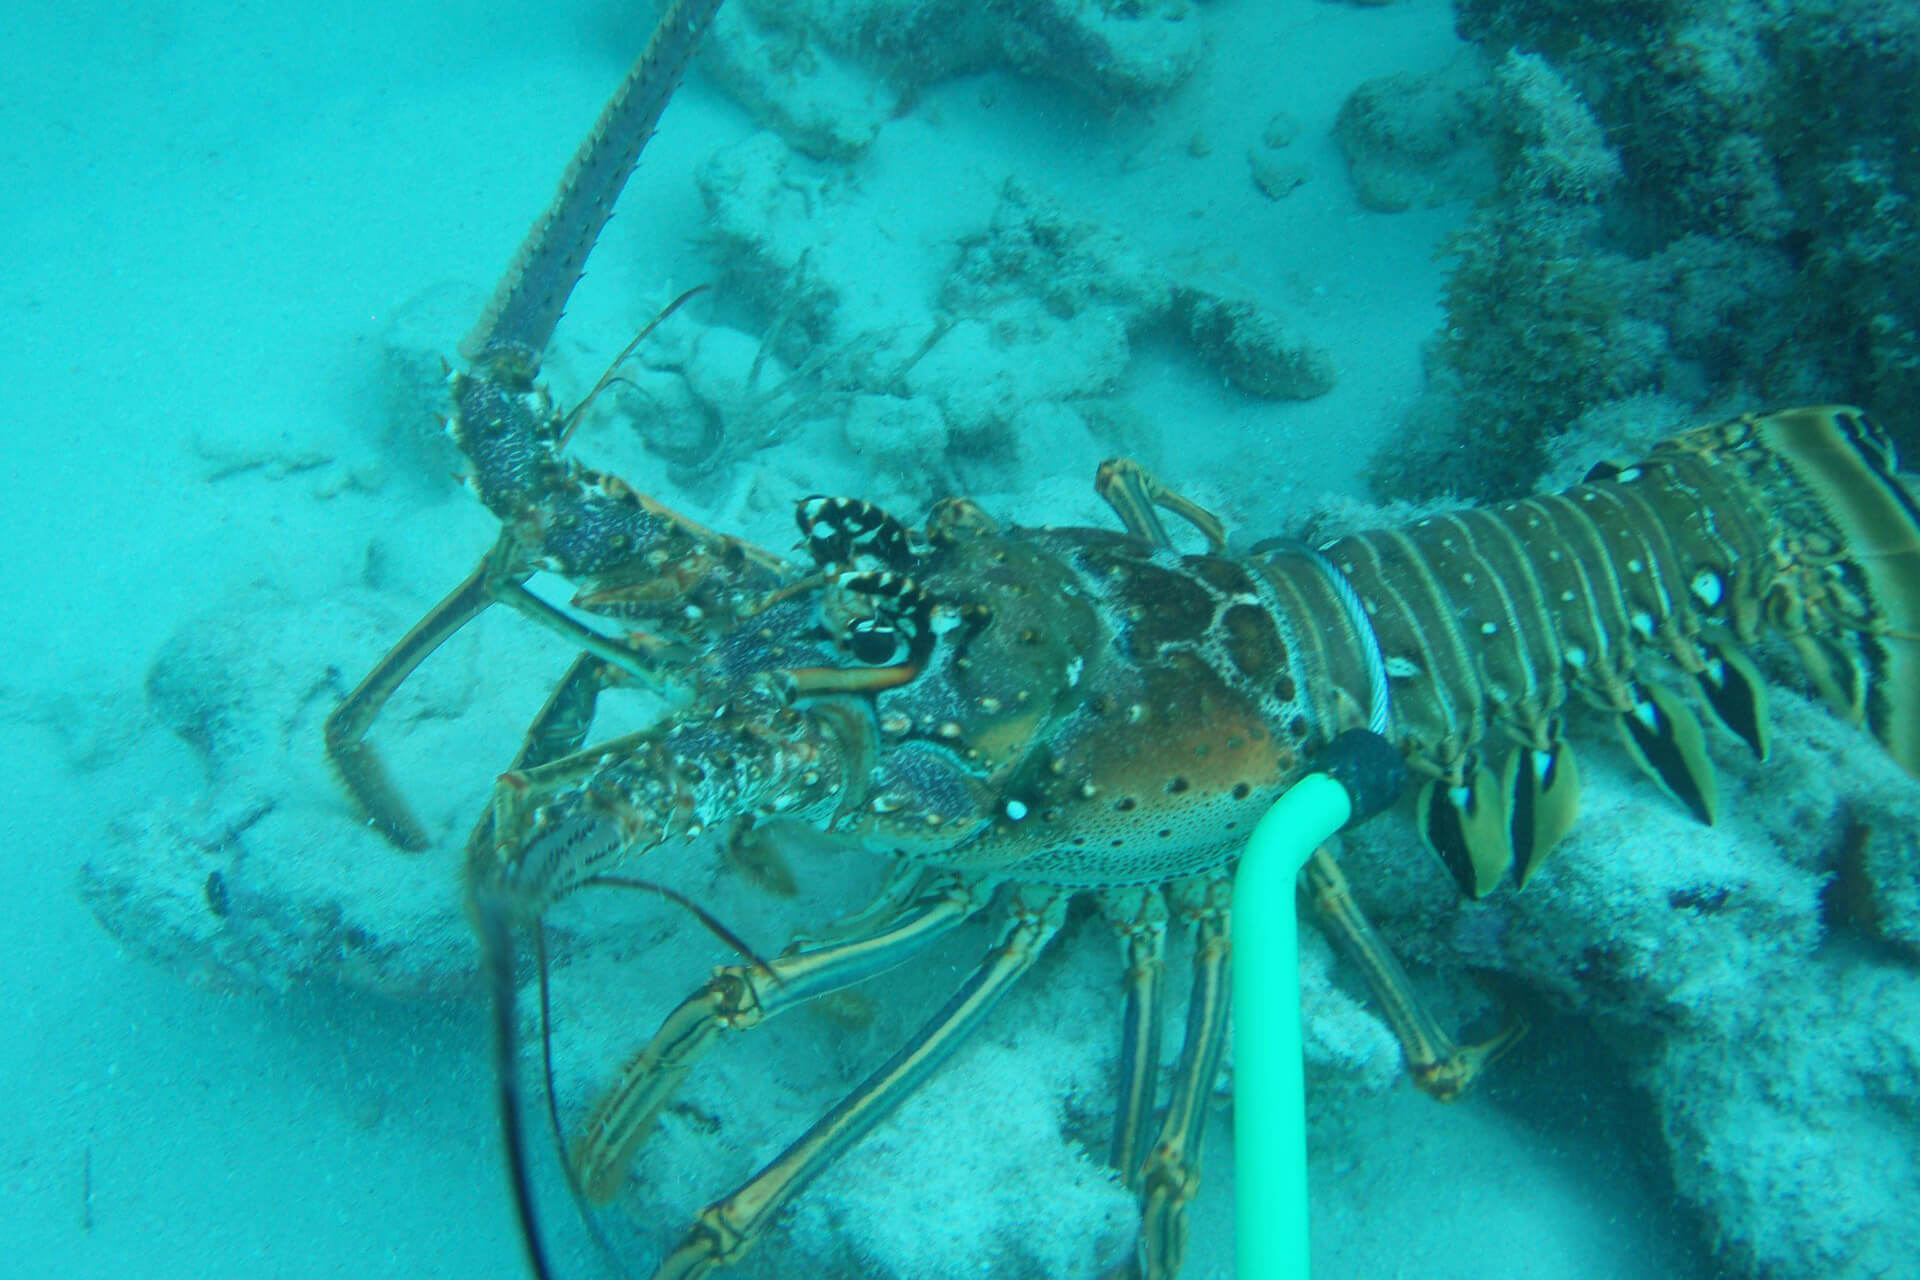 Lobster underwater at Tildens Scuba Center.